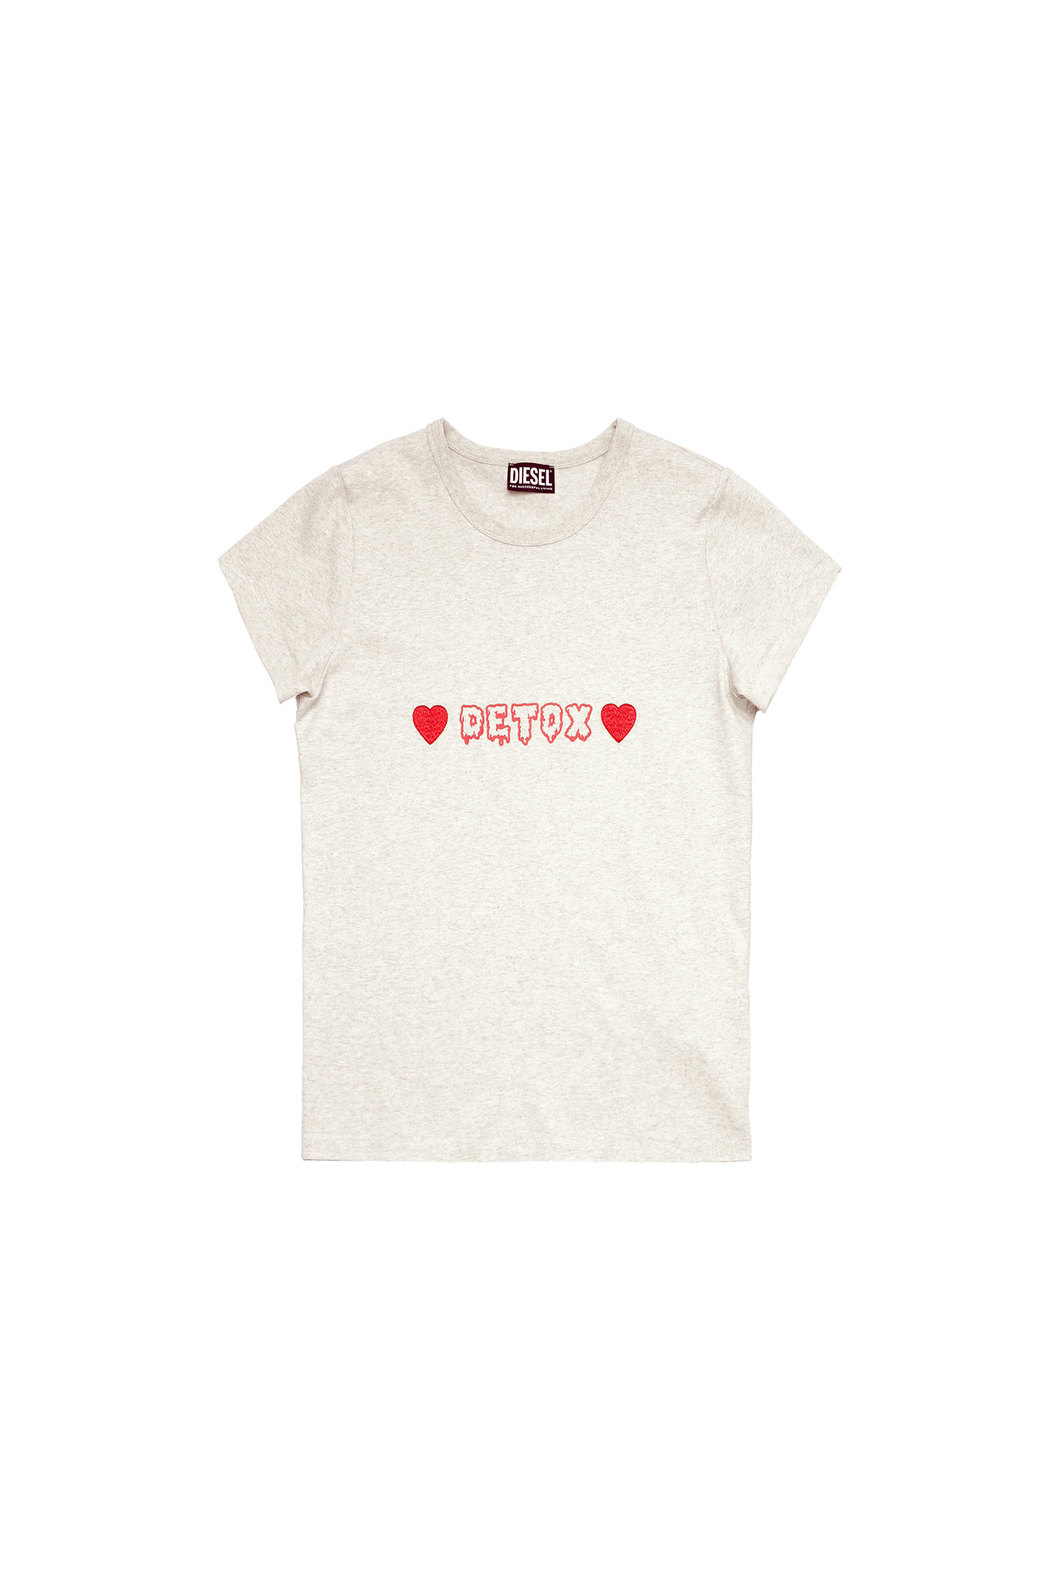 T-shirt with Detox print